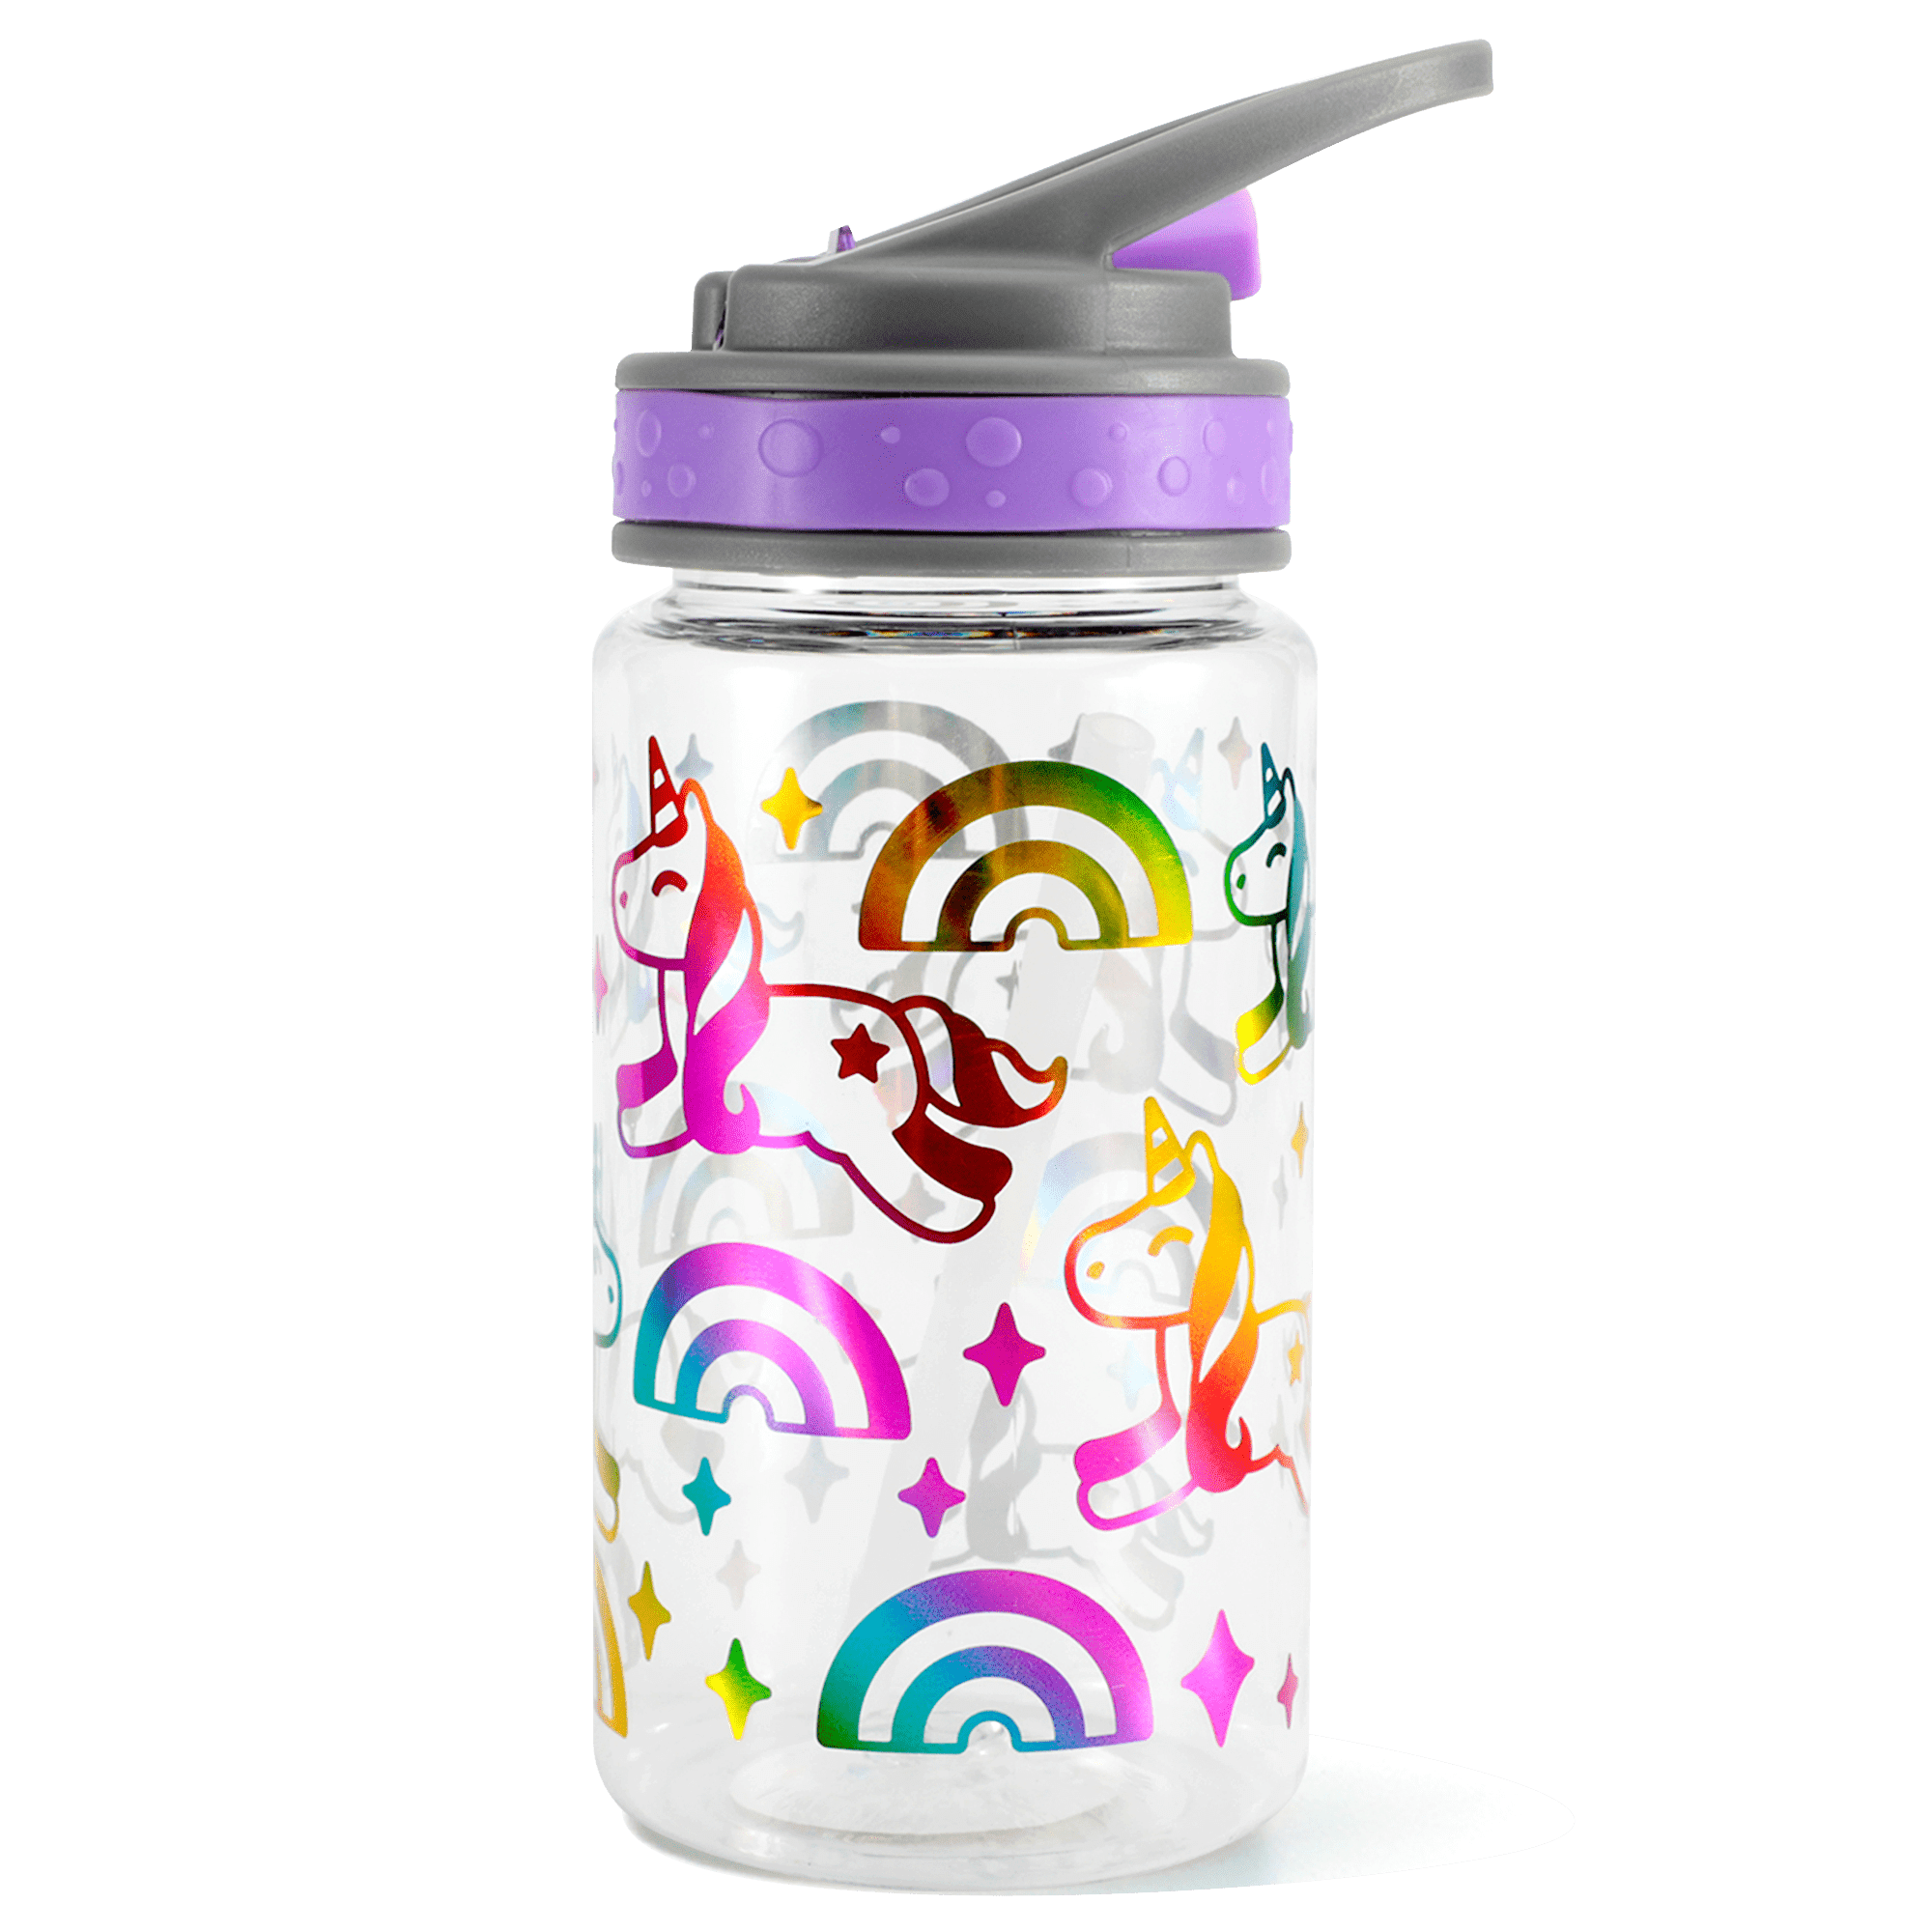  Home Tune 15oz Kids Water Drinking Bottle - BPA Free